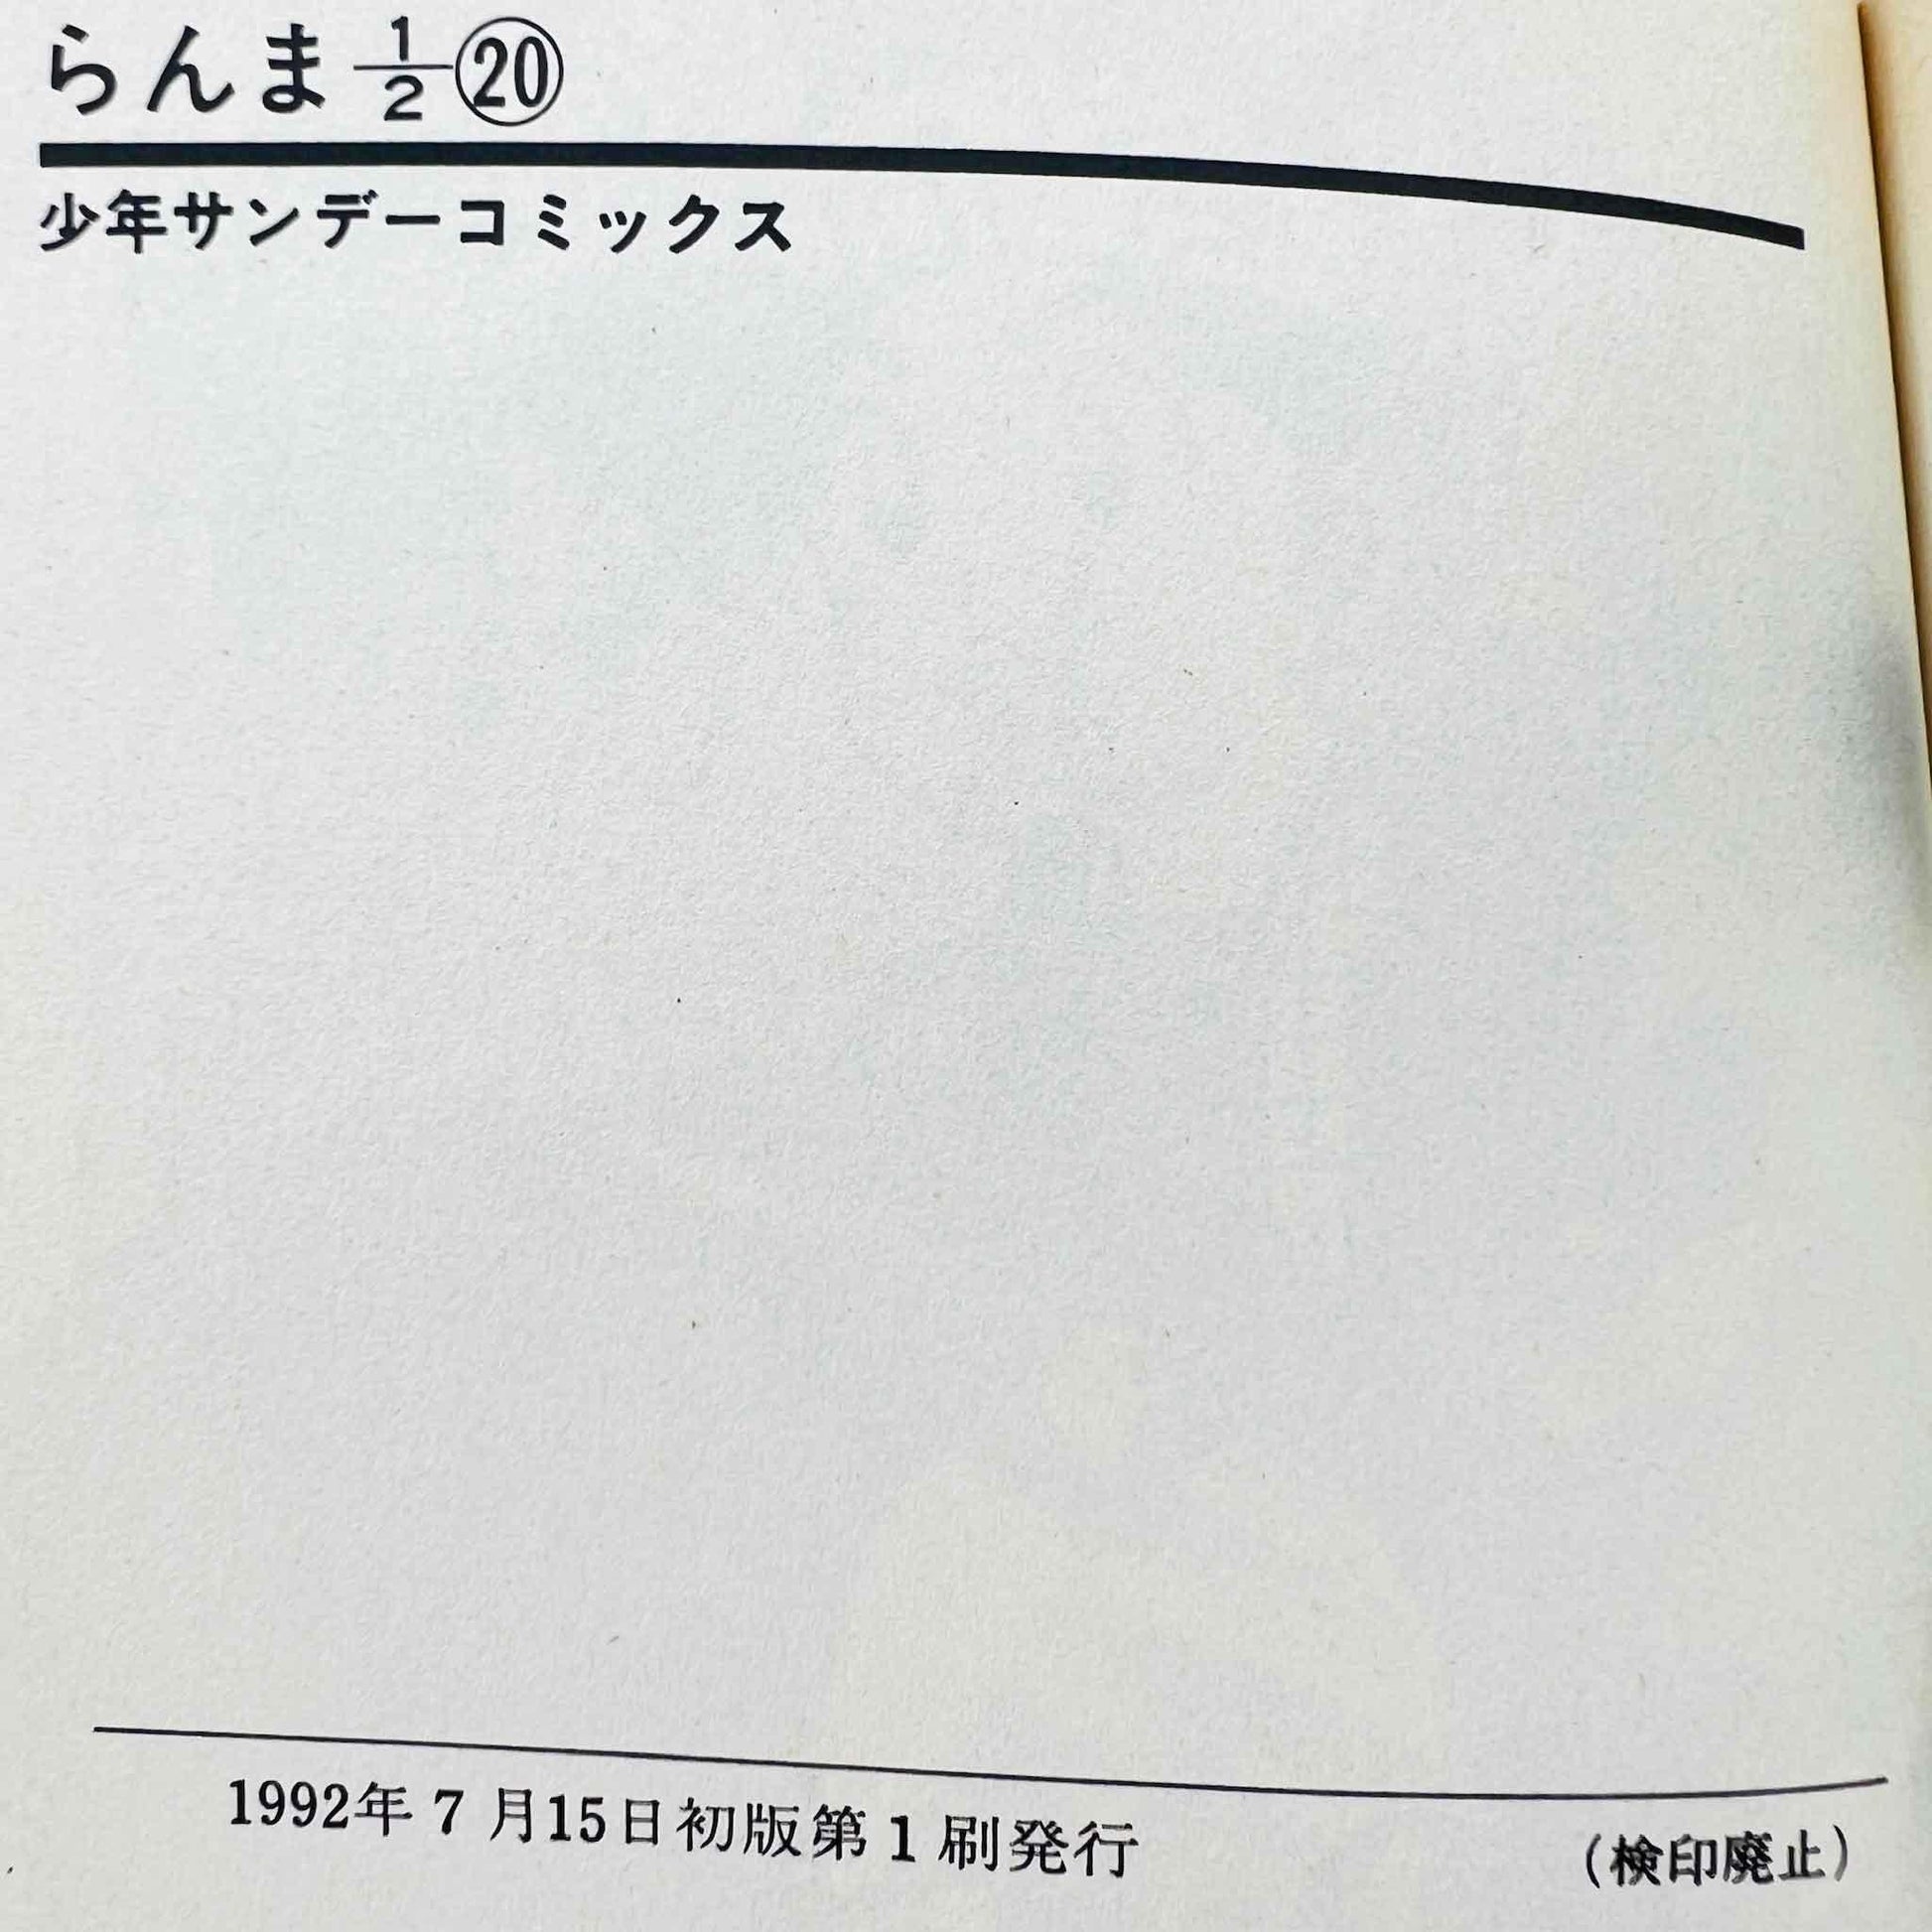 Ranma ½ - Volume 20 - 1stPrint.net - 1st First Print Edition Manga Store - M-RANMA-20-001